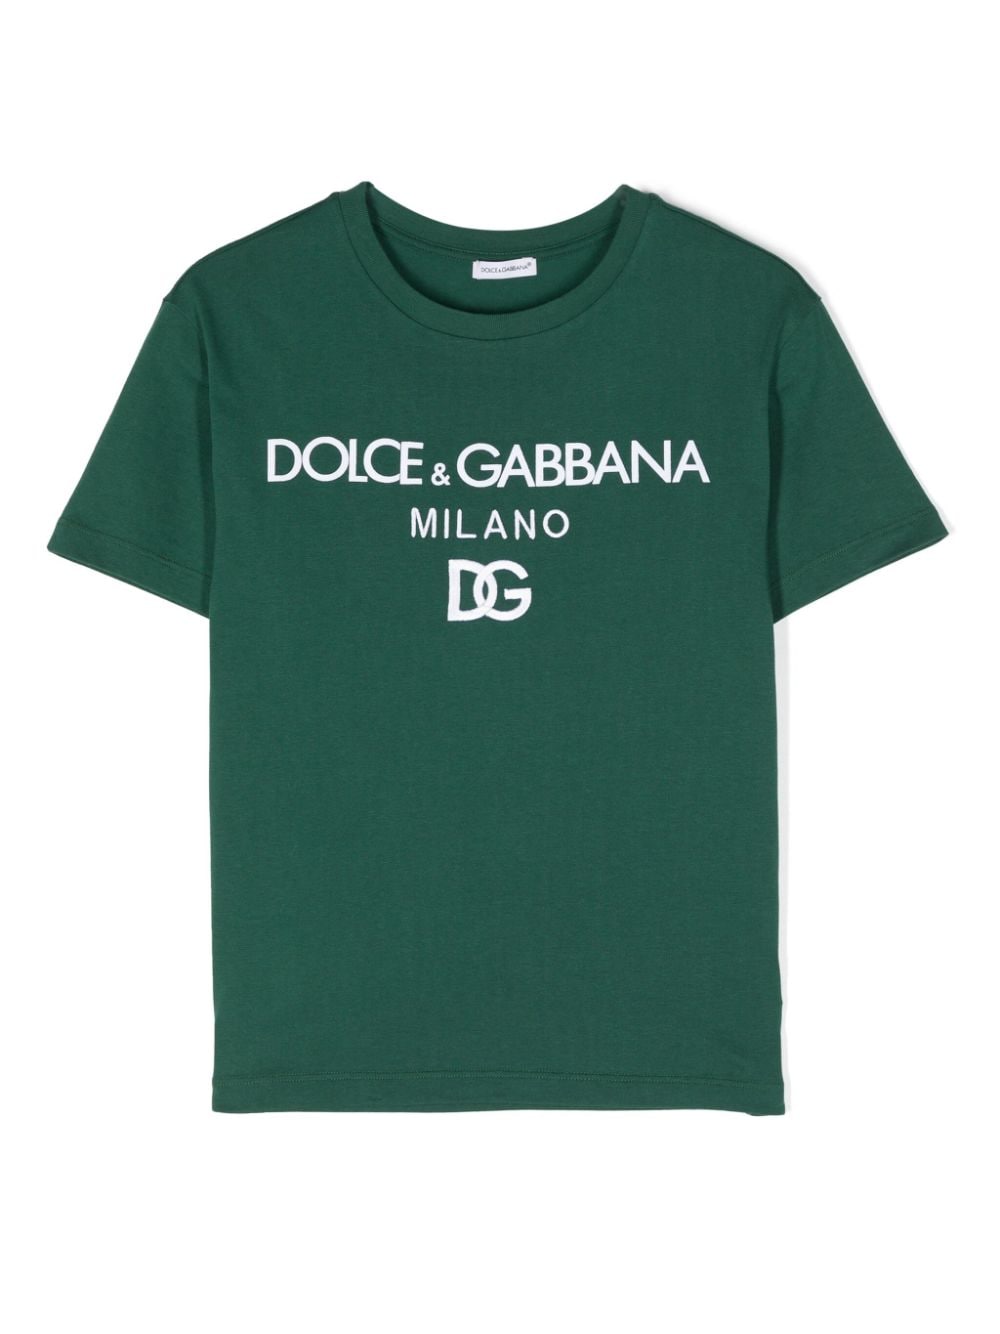 Dolce & Gabbana Kids DG Milano logo-print T-Shirt - Green von Dolce & Gabbana Kids